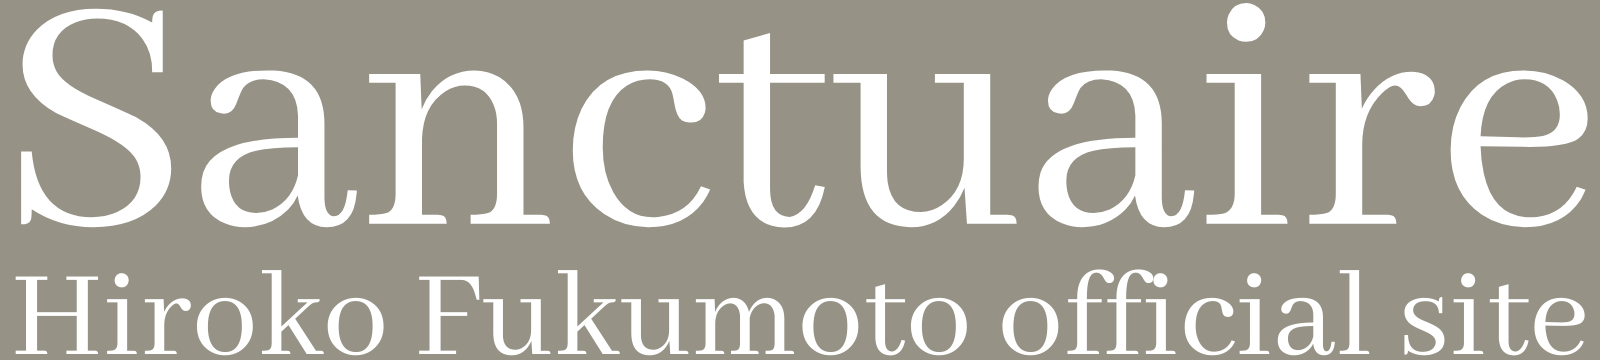 Sanctuair hirokofukumoto official site